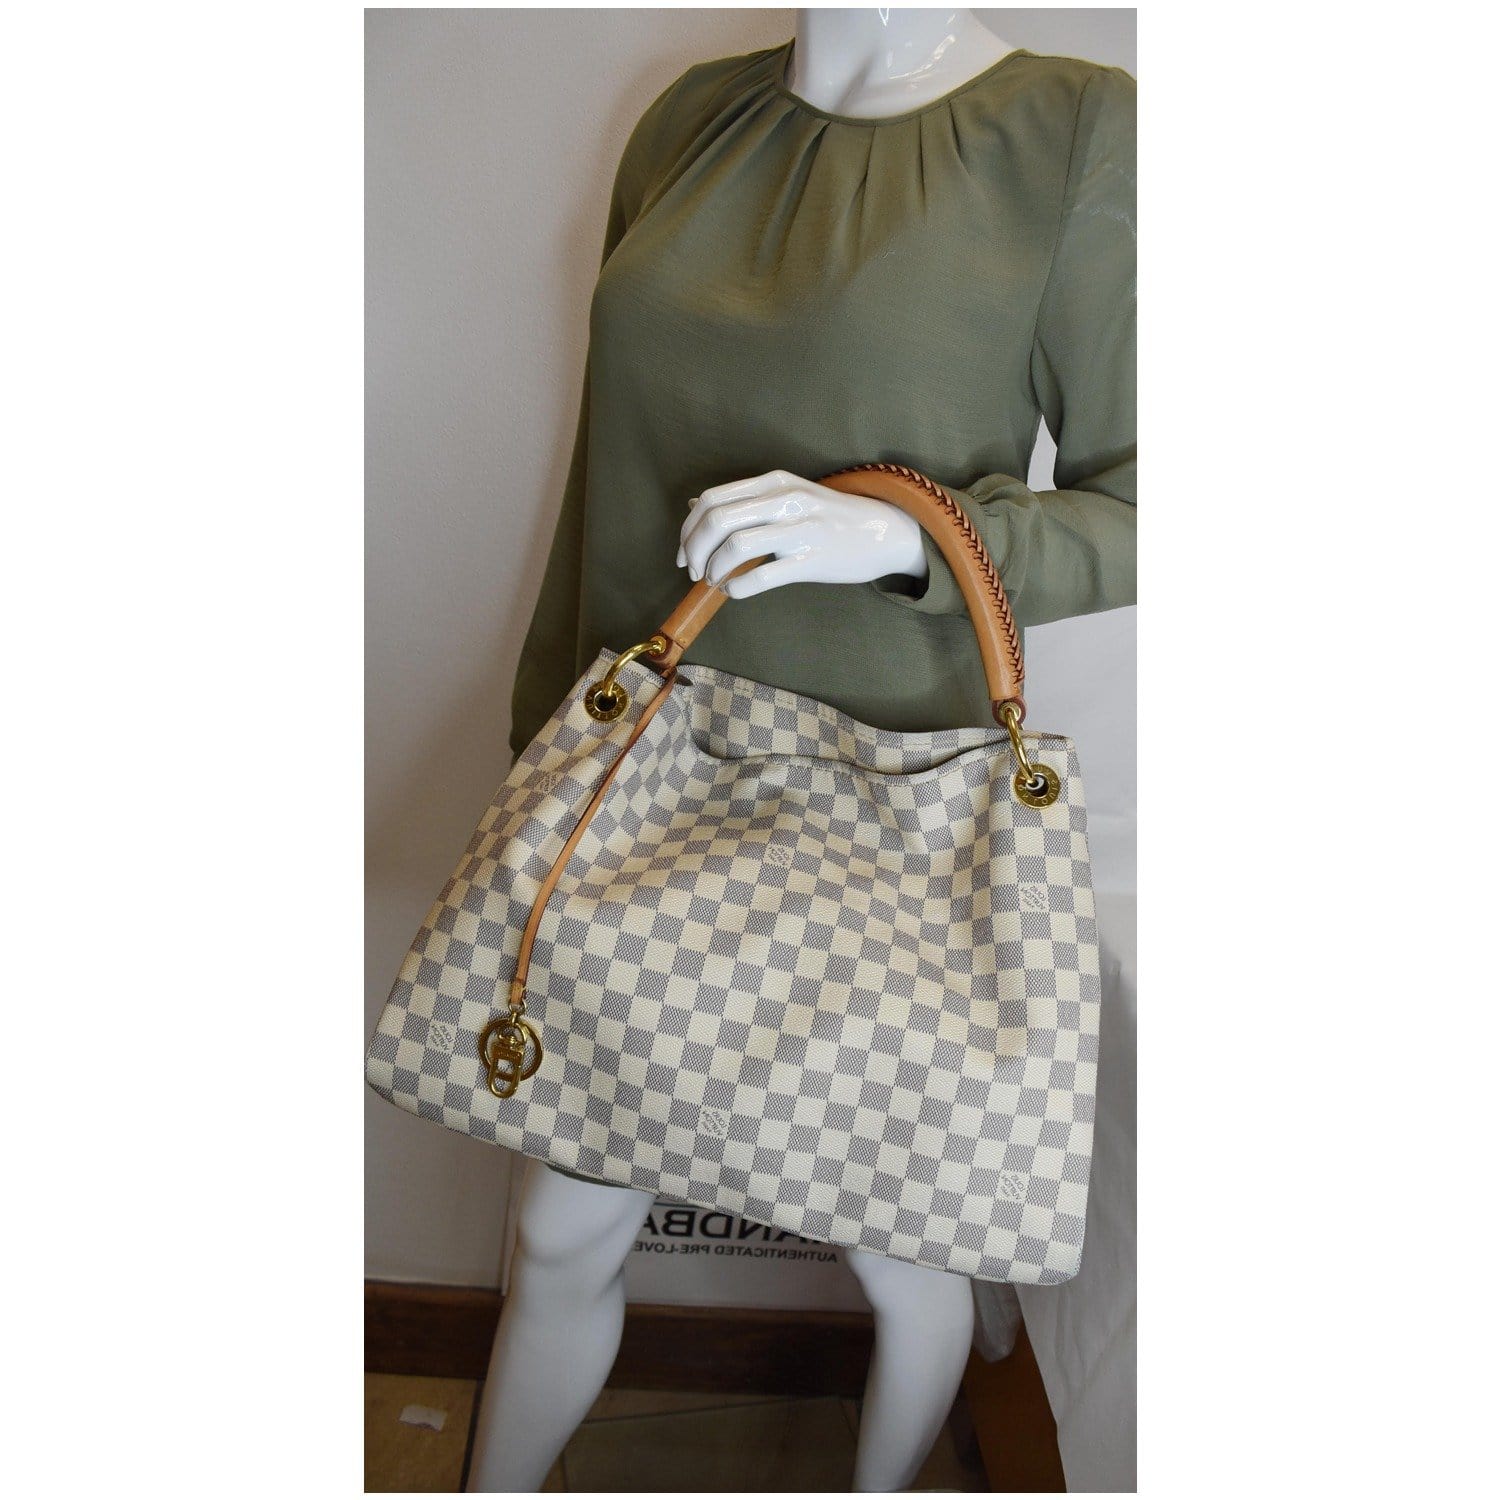 Louis Vuitton Bags for Women - Poshmark